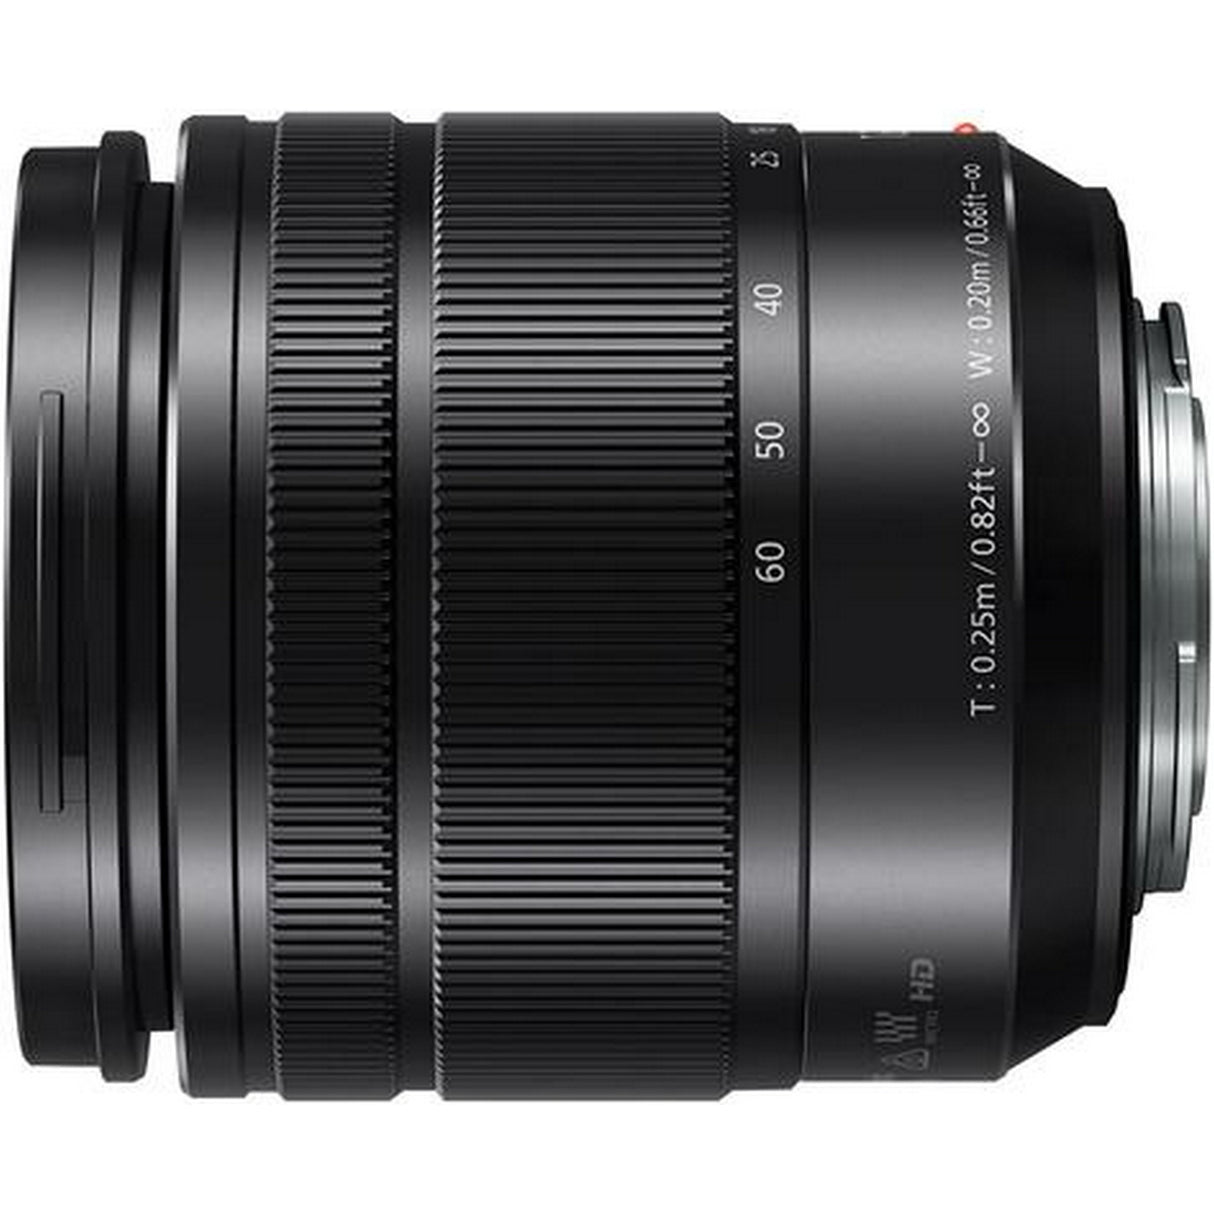 Panasonic LUMIX H-FS12060 G 12-60mm F3.5-5.6 ASPH Lens